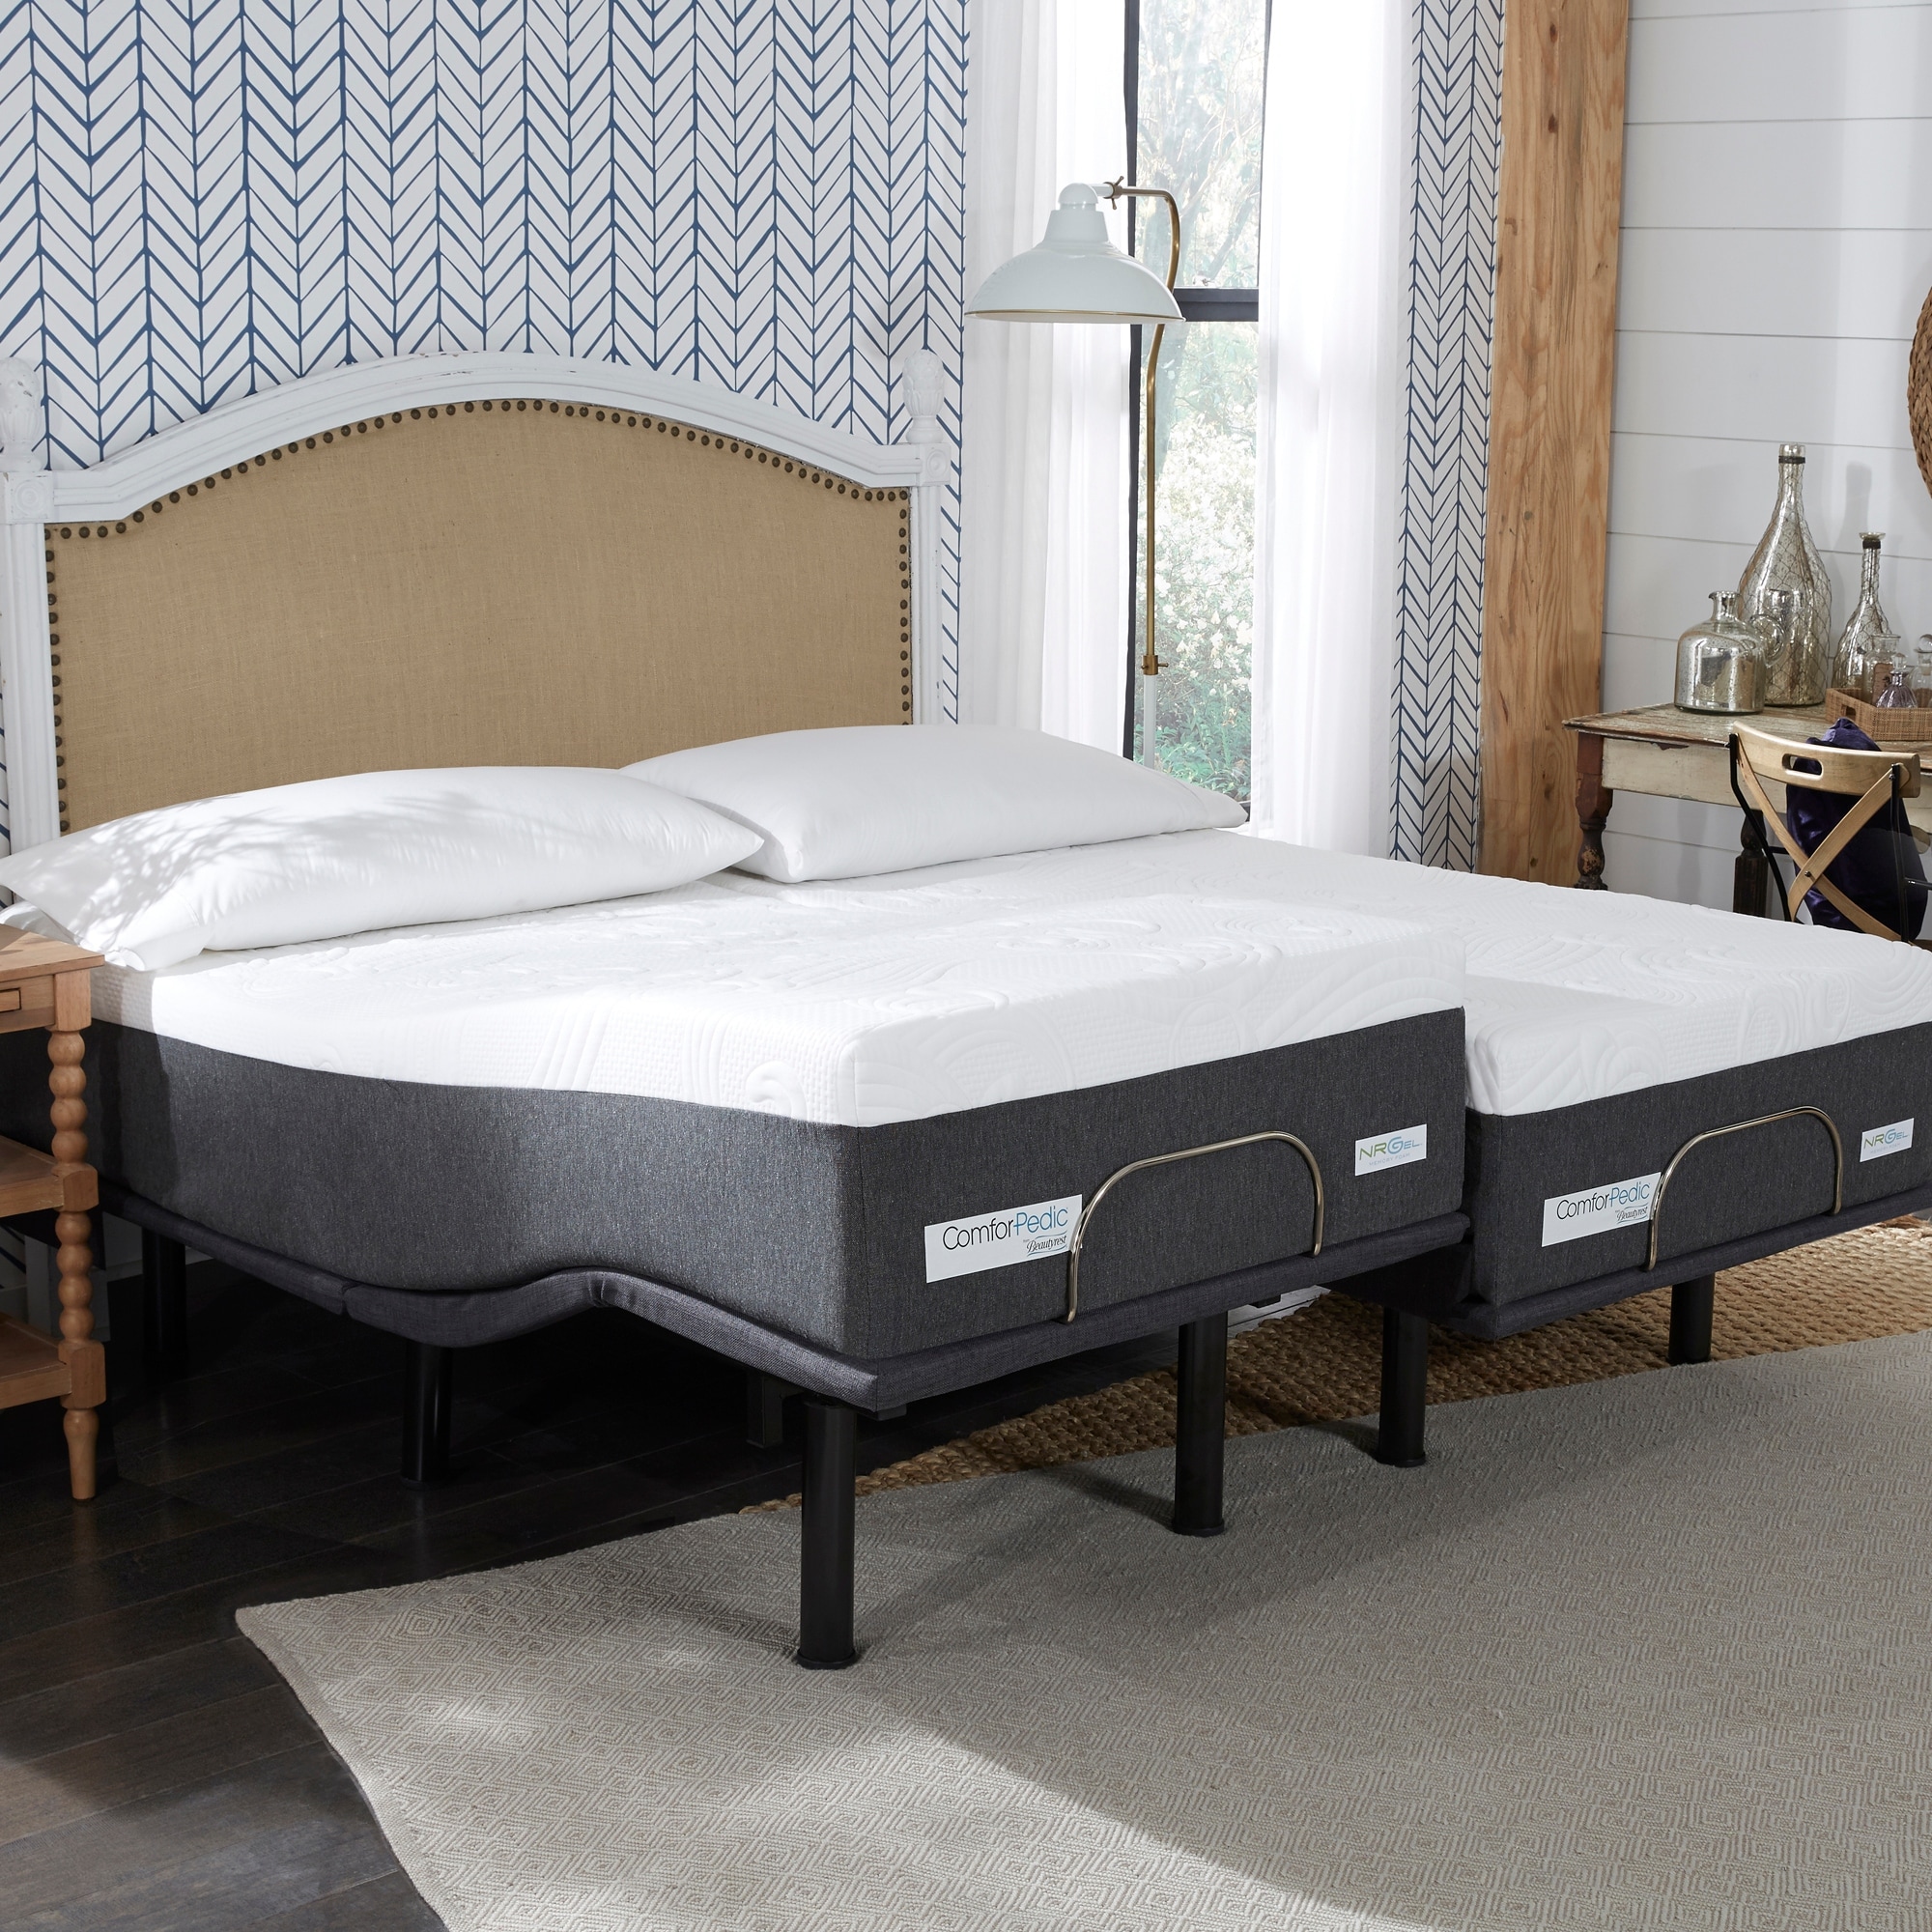 Twin XL Size Adjustable Bed Sets | Shop Online at Bed Bath & Beyond